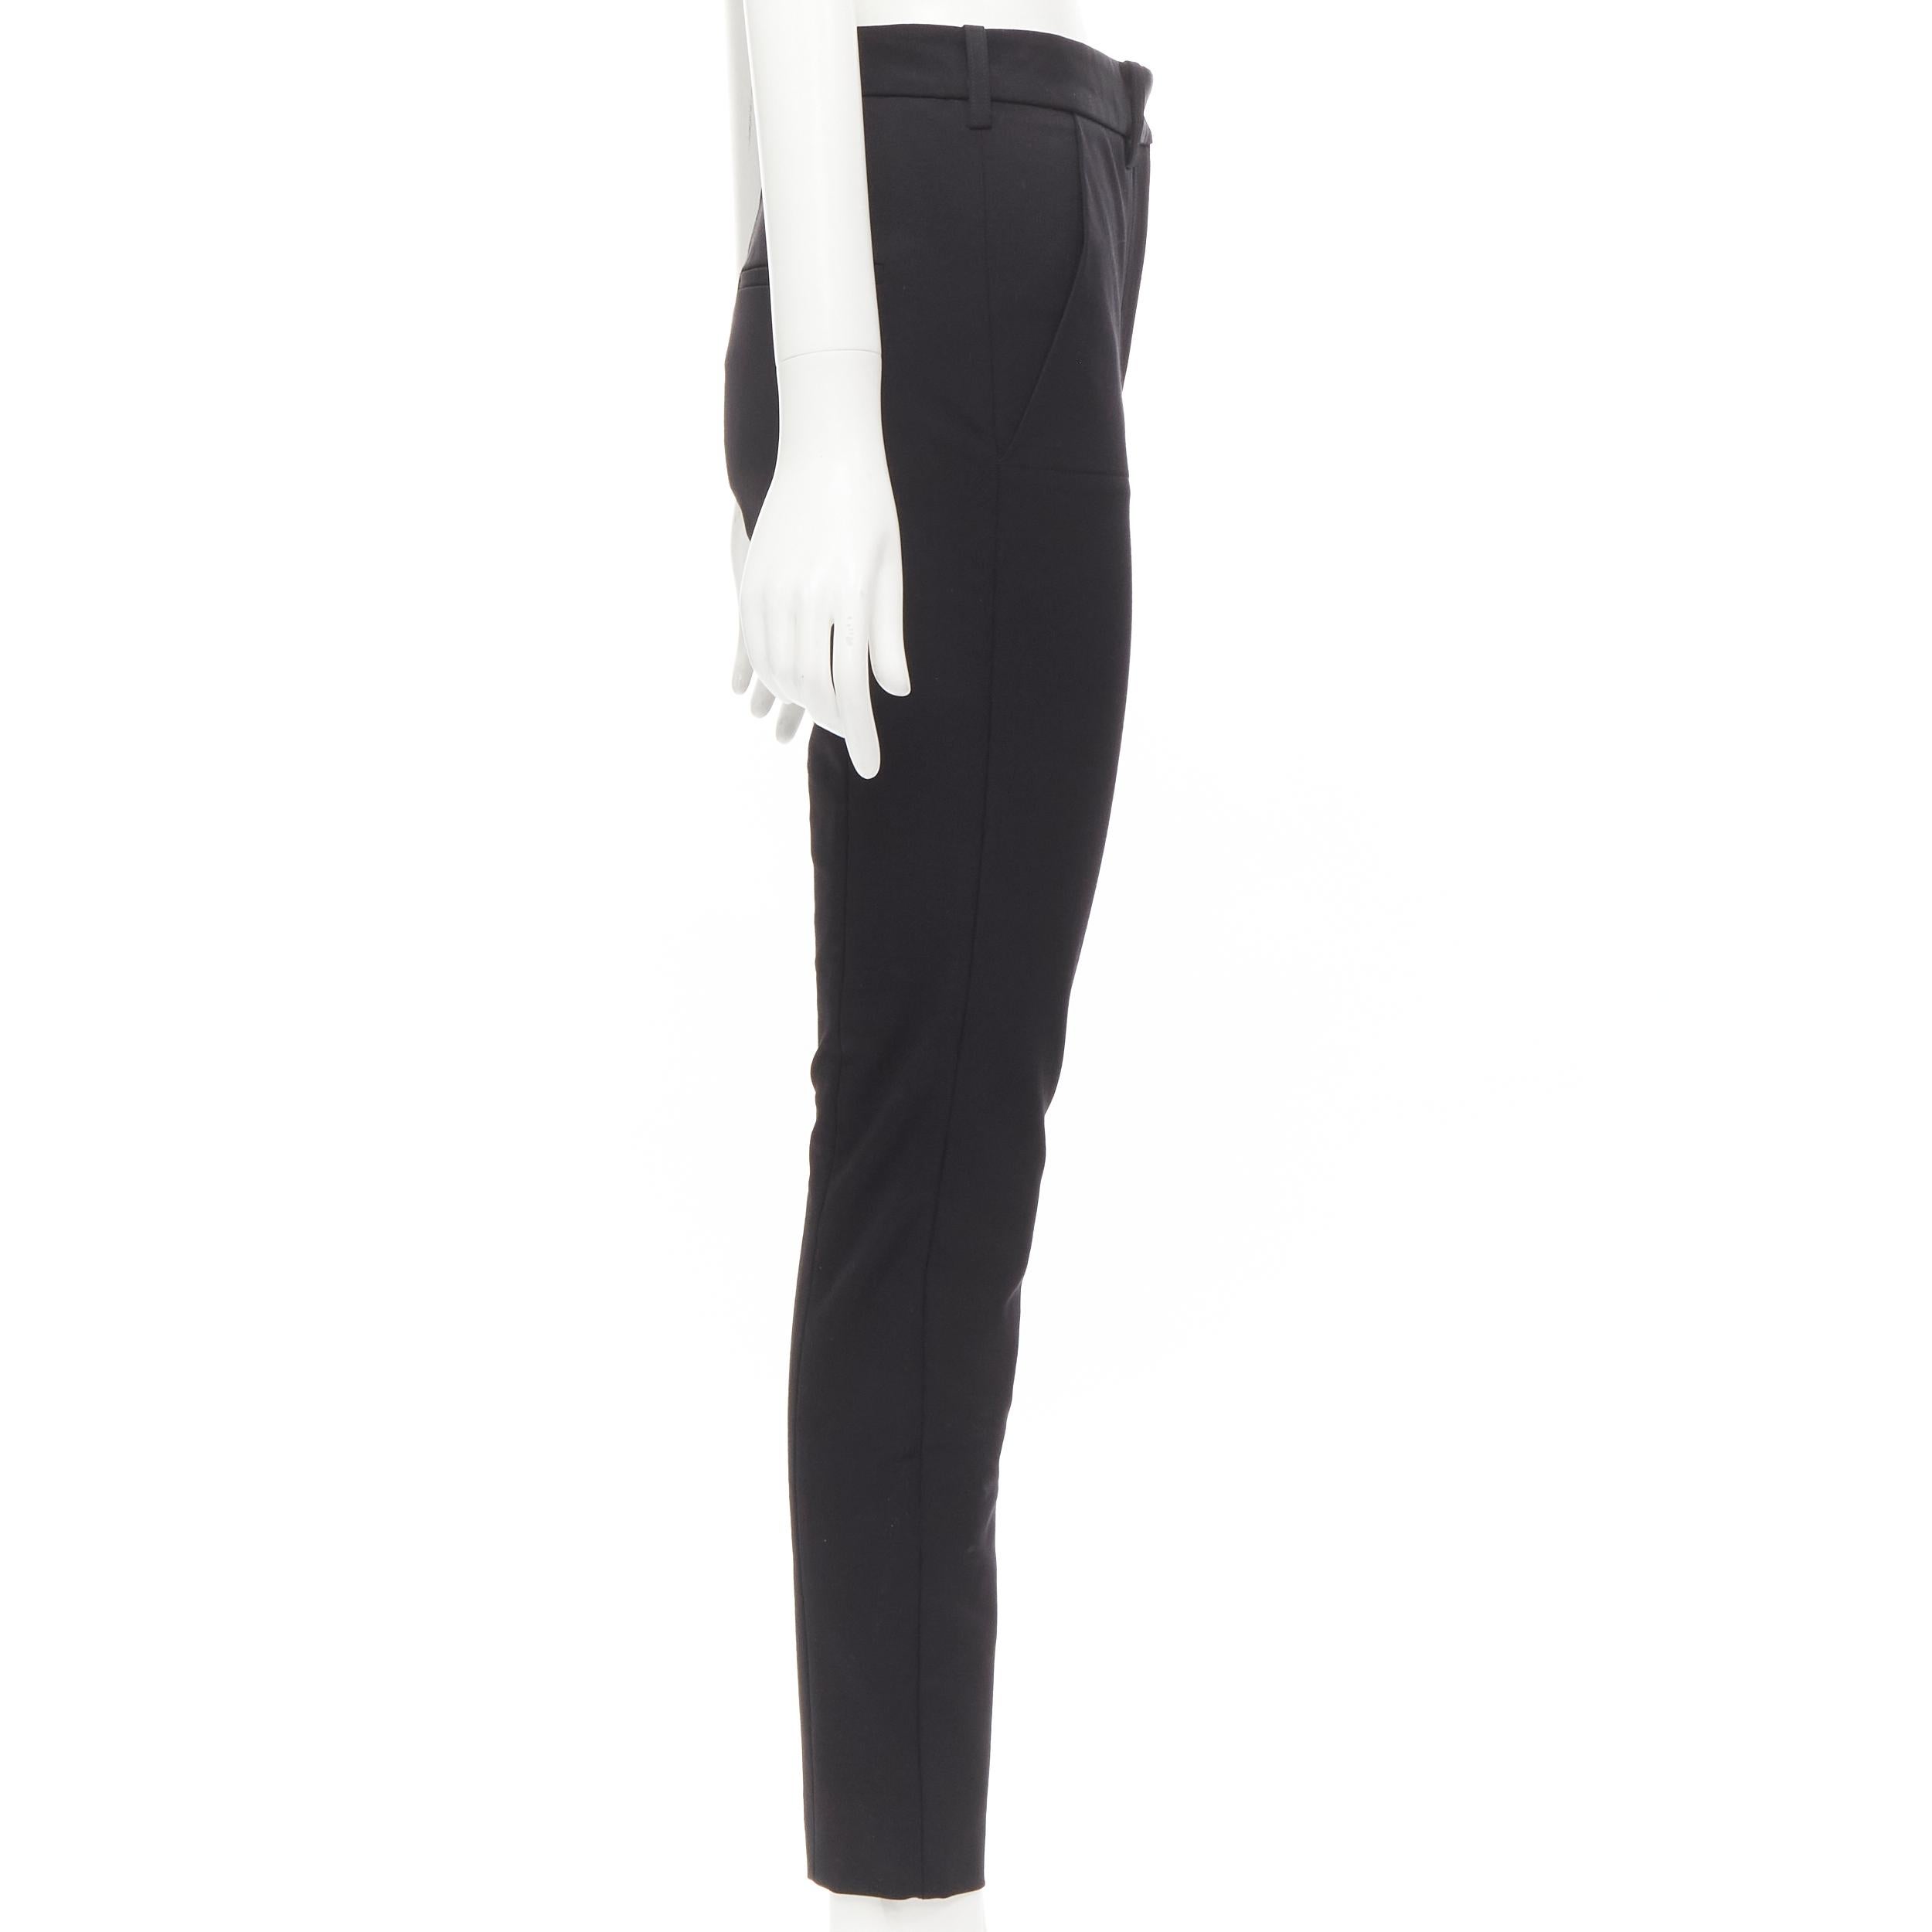 Black VICTORIA BEKHAM black stiff structured heavy fabric skinny pants UK10 M For Sale